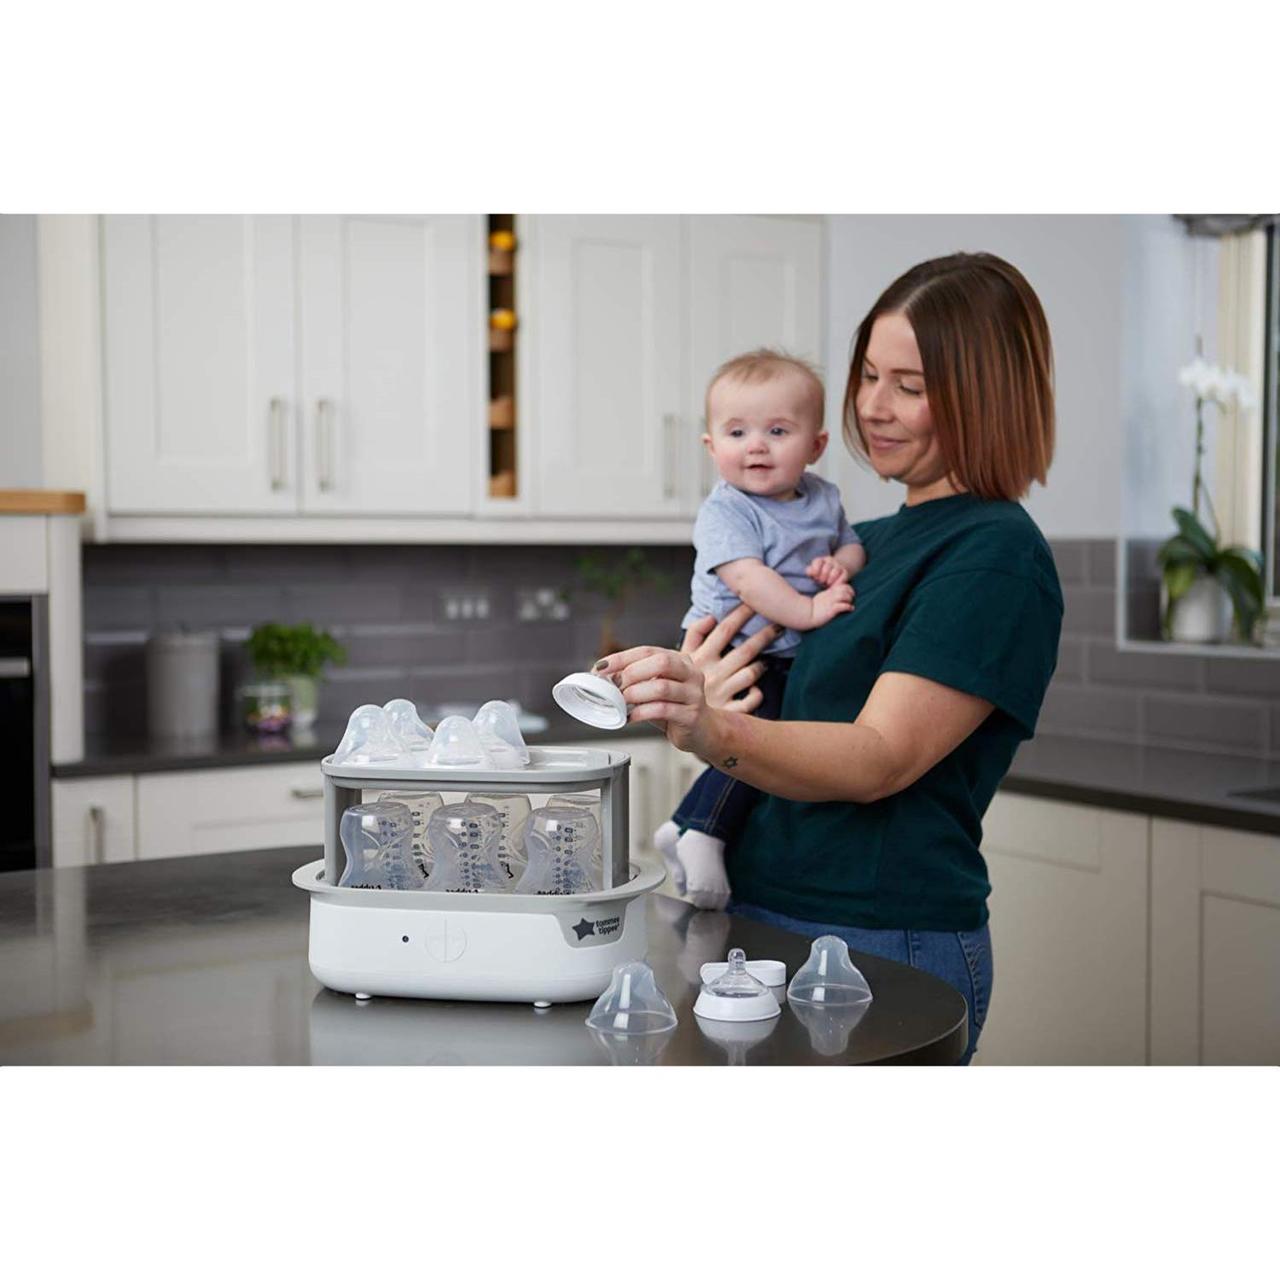 Tommee Tippee Super Steam Advanced Electric Steriliser for 6 Baby Bottles, Black - BambiniJO